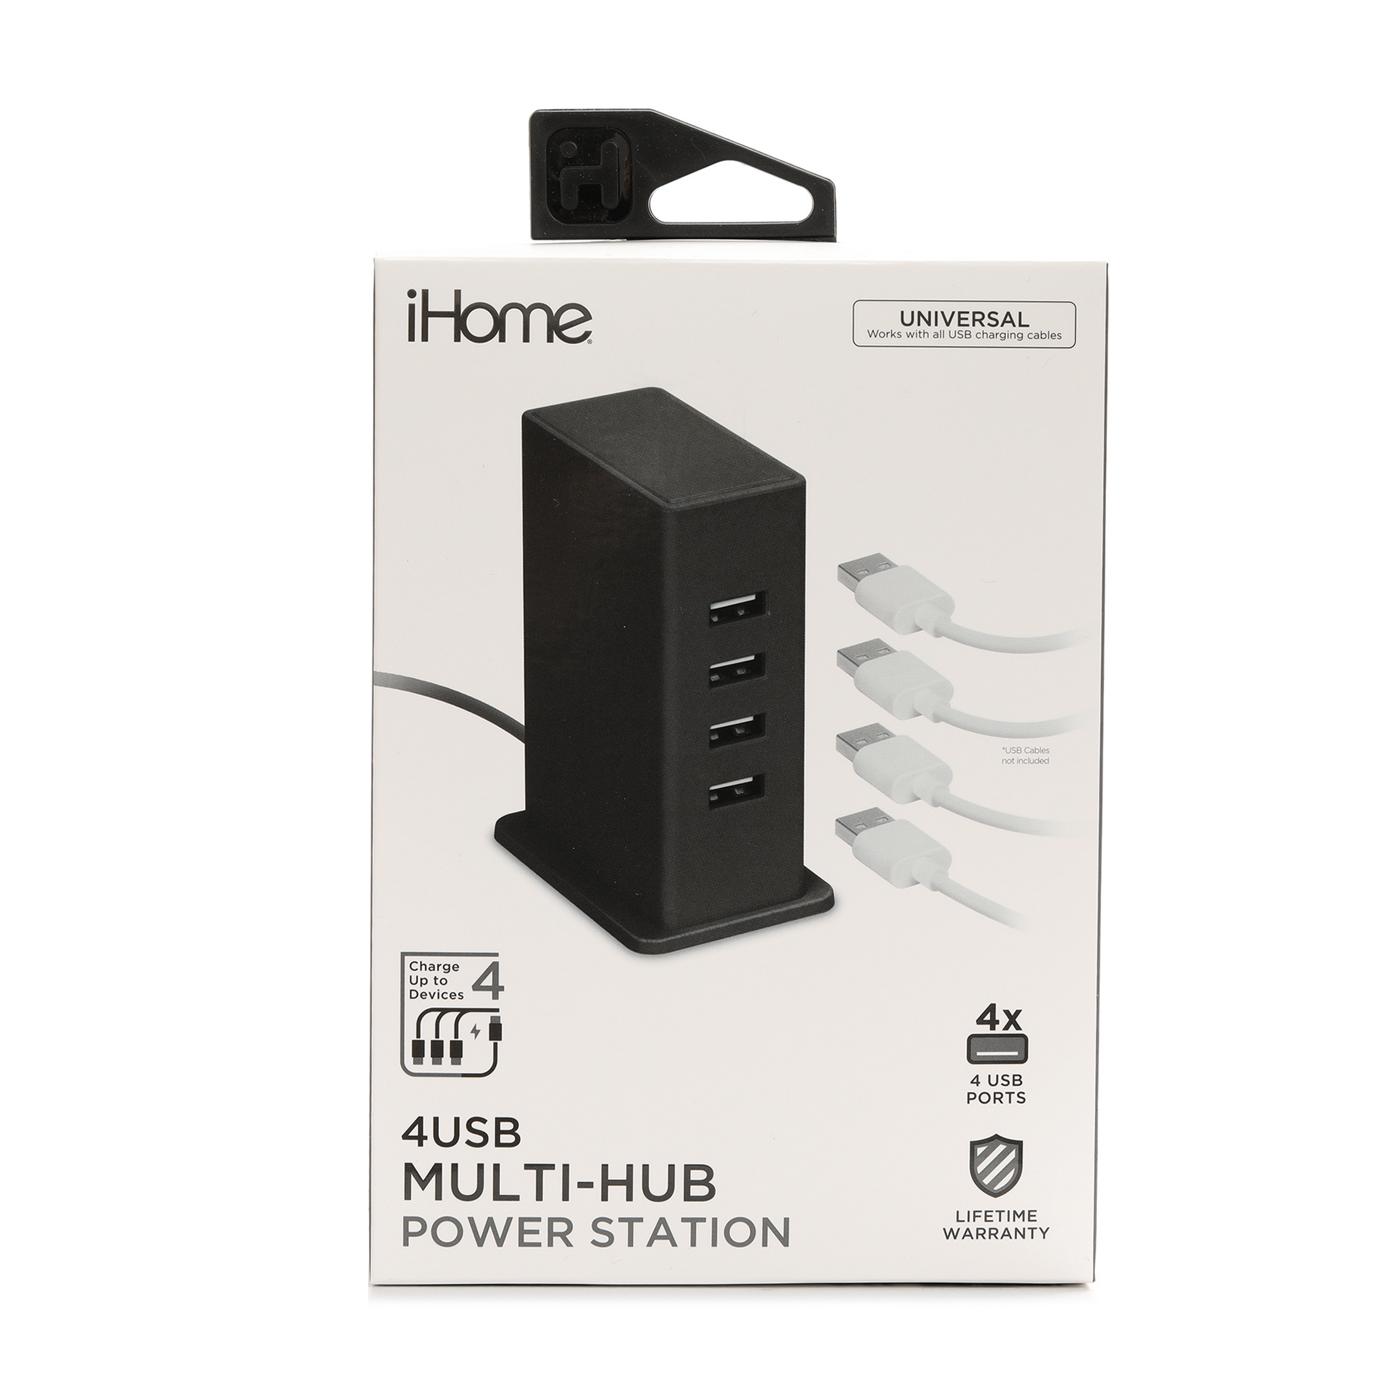 iHome 4-Port USB Power Station - Black; image 1 of 2